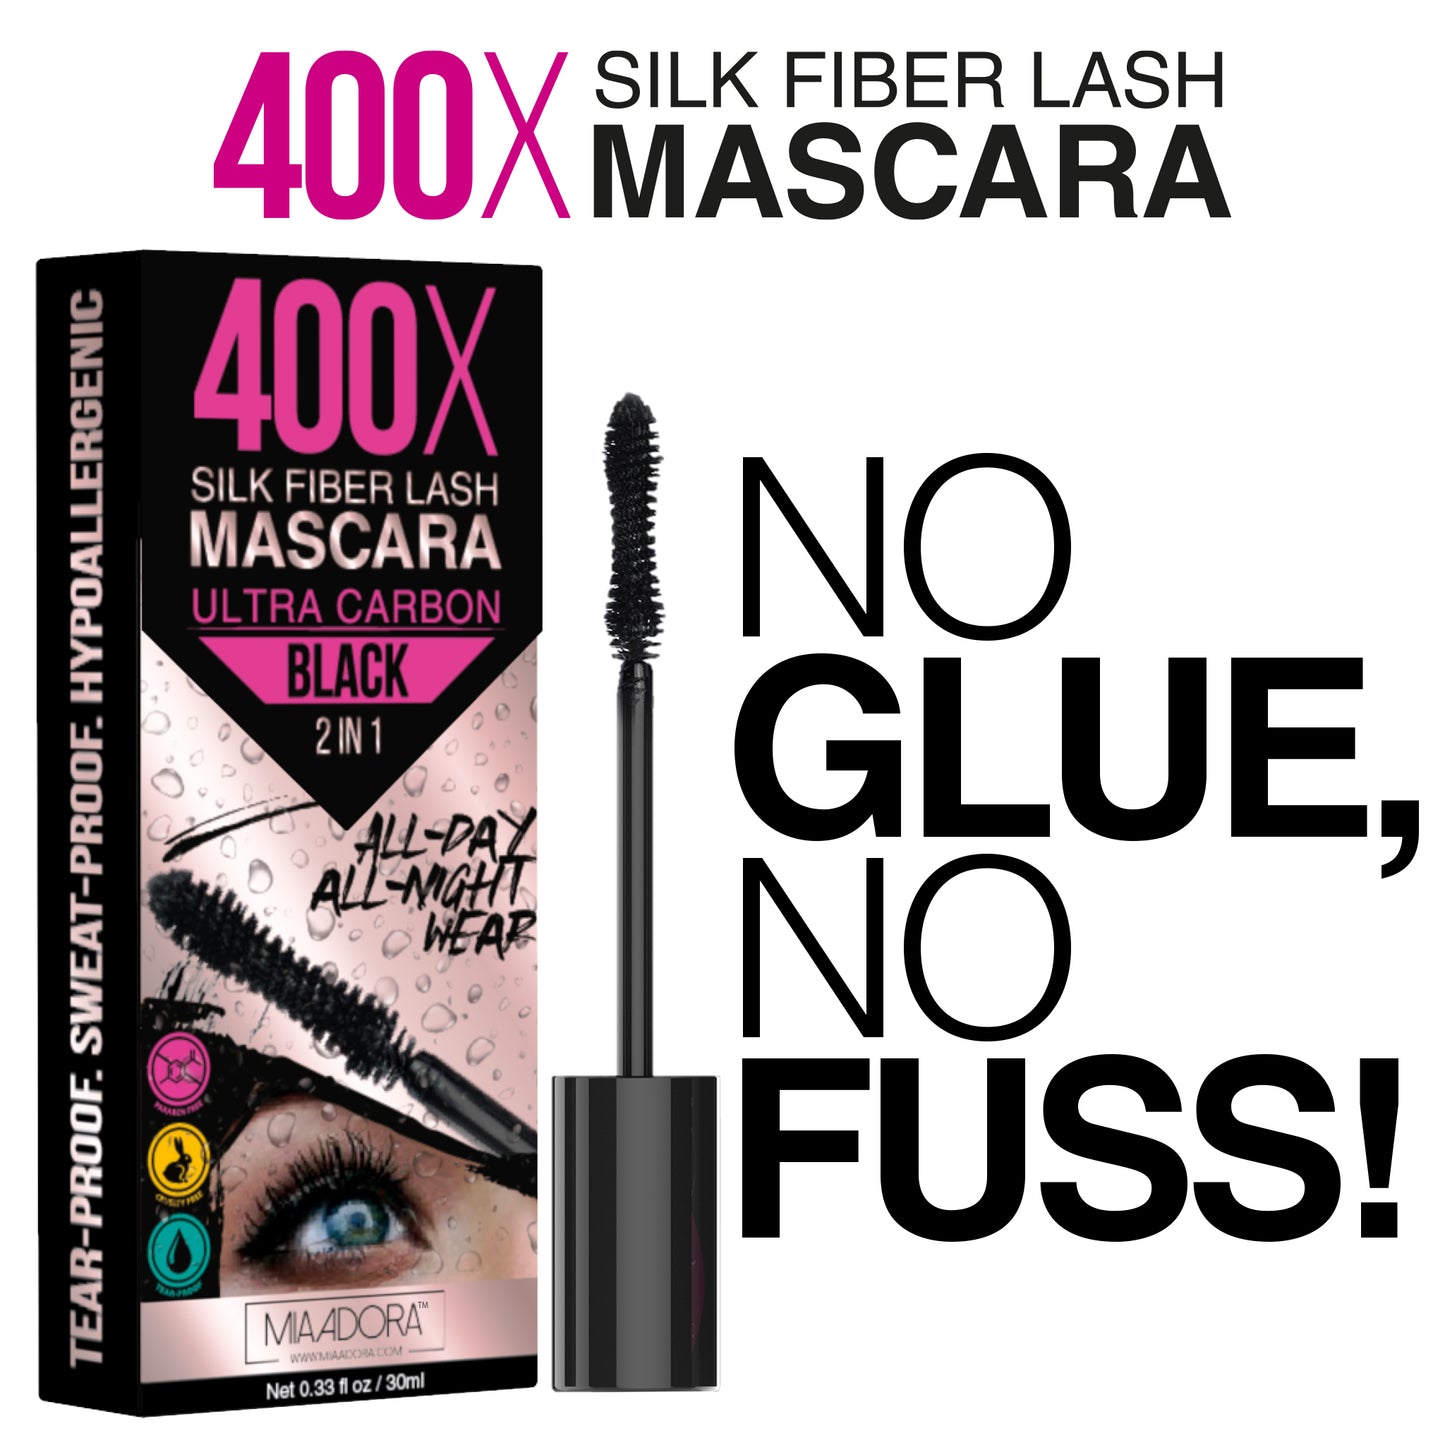 400X Fiber Lash Mascara by Mia Adora- Achieve Stunning, Voluminous Lashes